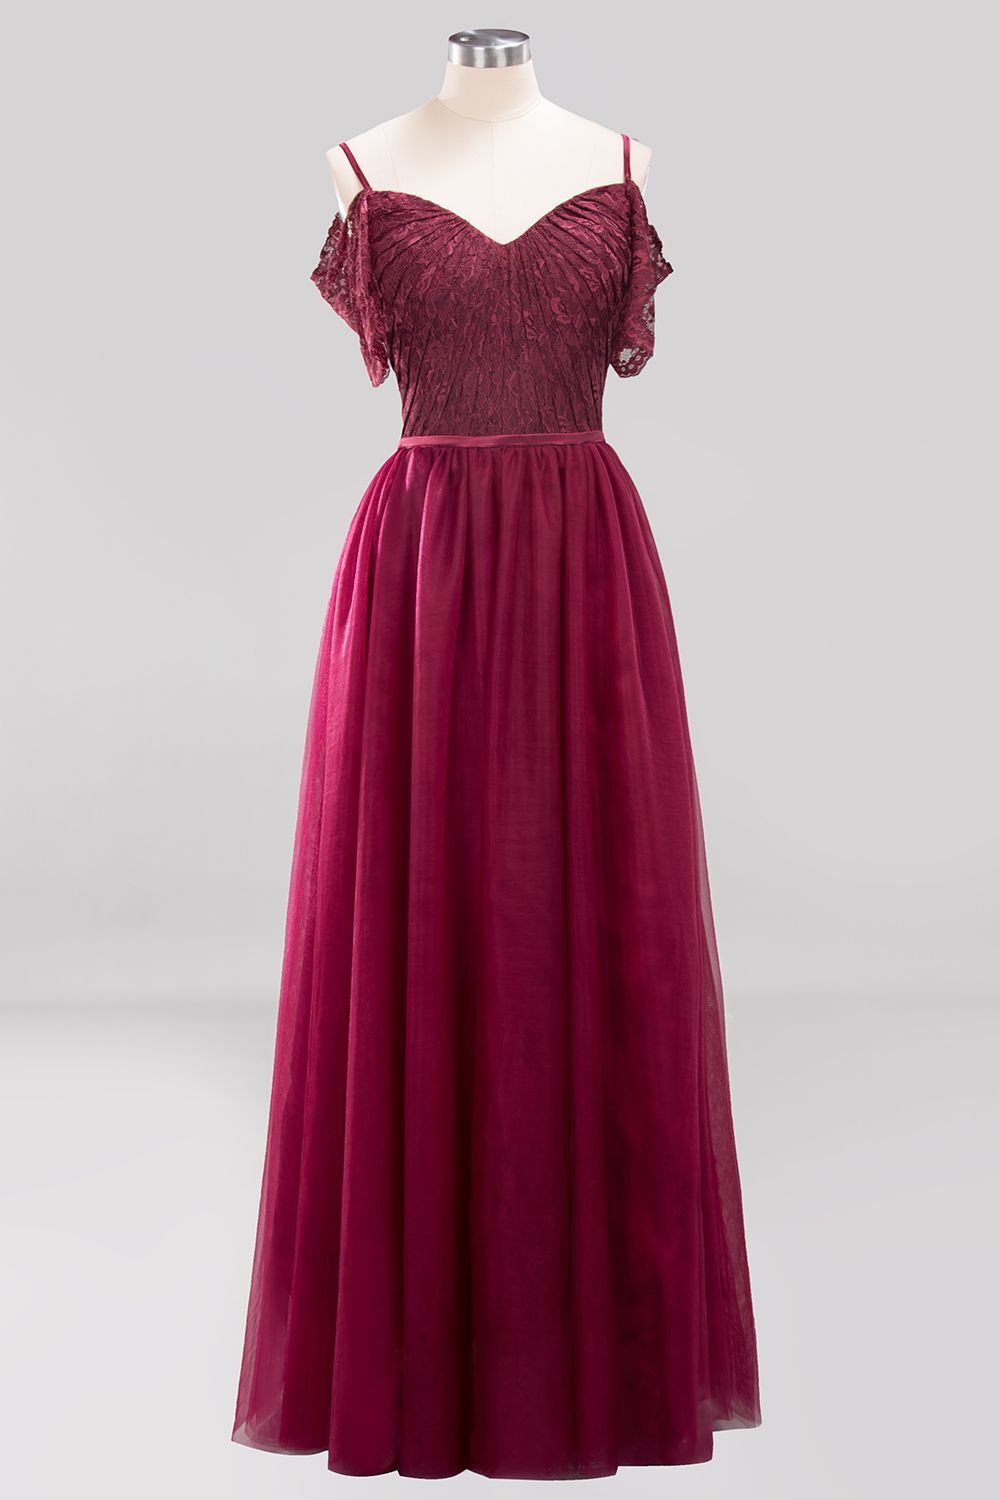 Straps Burgundy A-line Lace and Chiffon Long Bridesmaid Dress